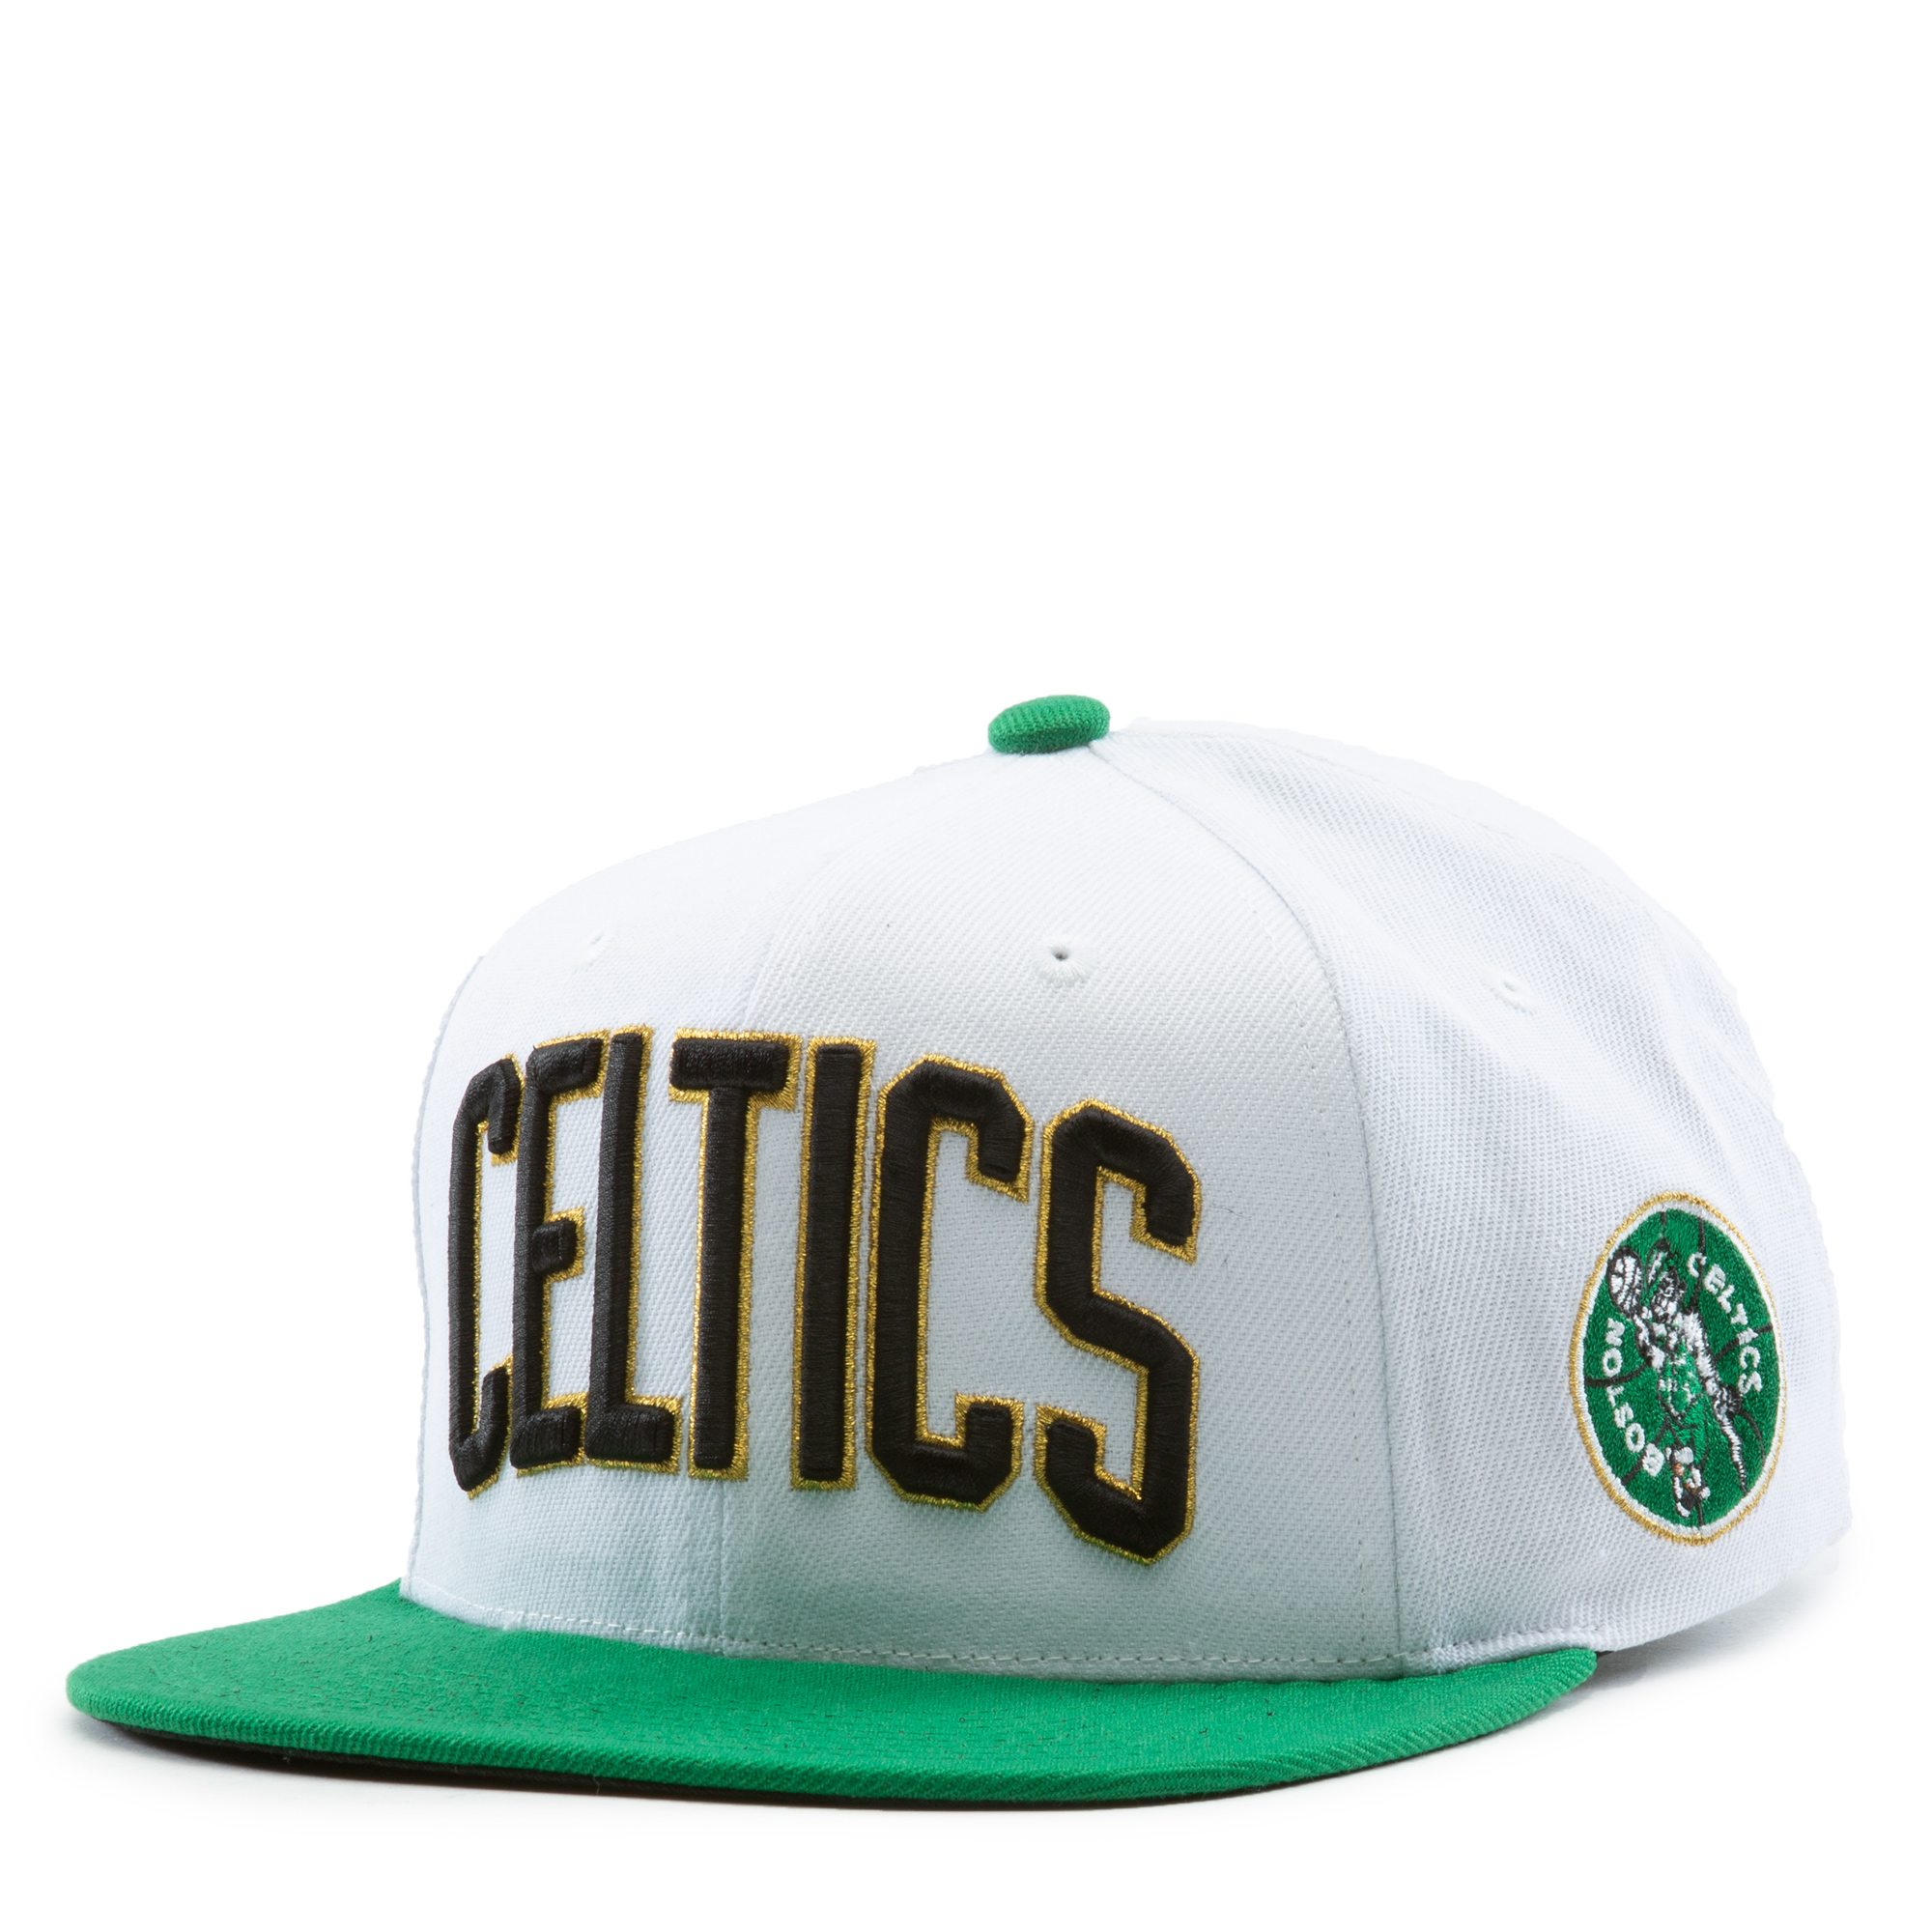 Mitchell & Ness Boston Celtics Snapshot Snapback Hat - Black